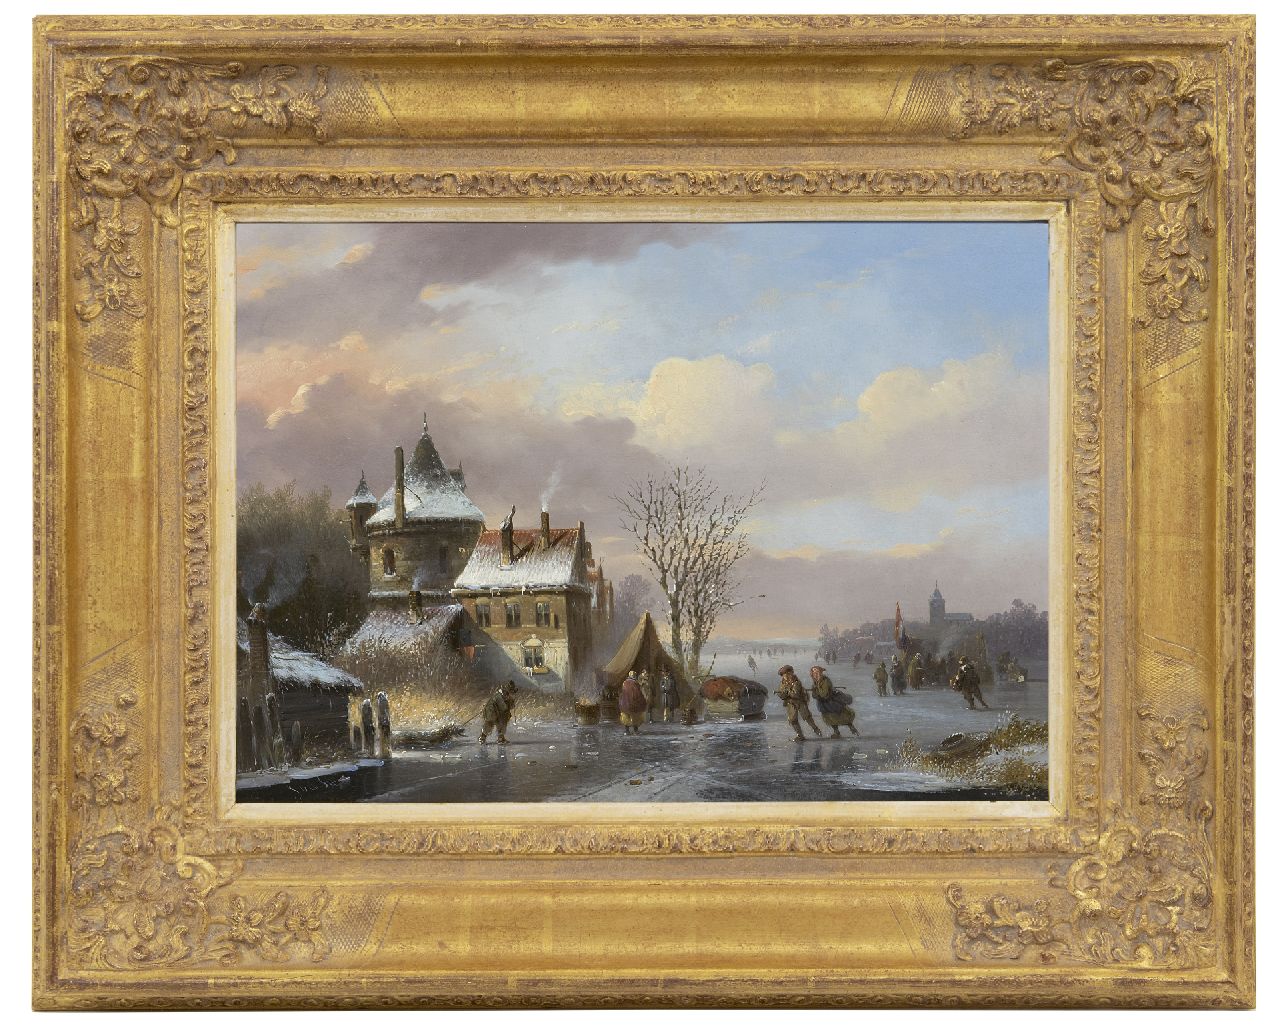 Stok J. van der | Jacobus van der Stok, A frozen canal with skaters and koek-en-zopie food stalls, oil on panel 30.7 x 43.8 cm, signed l.l.